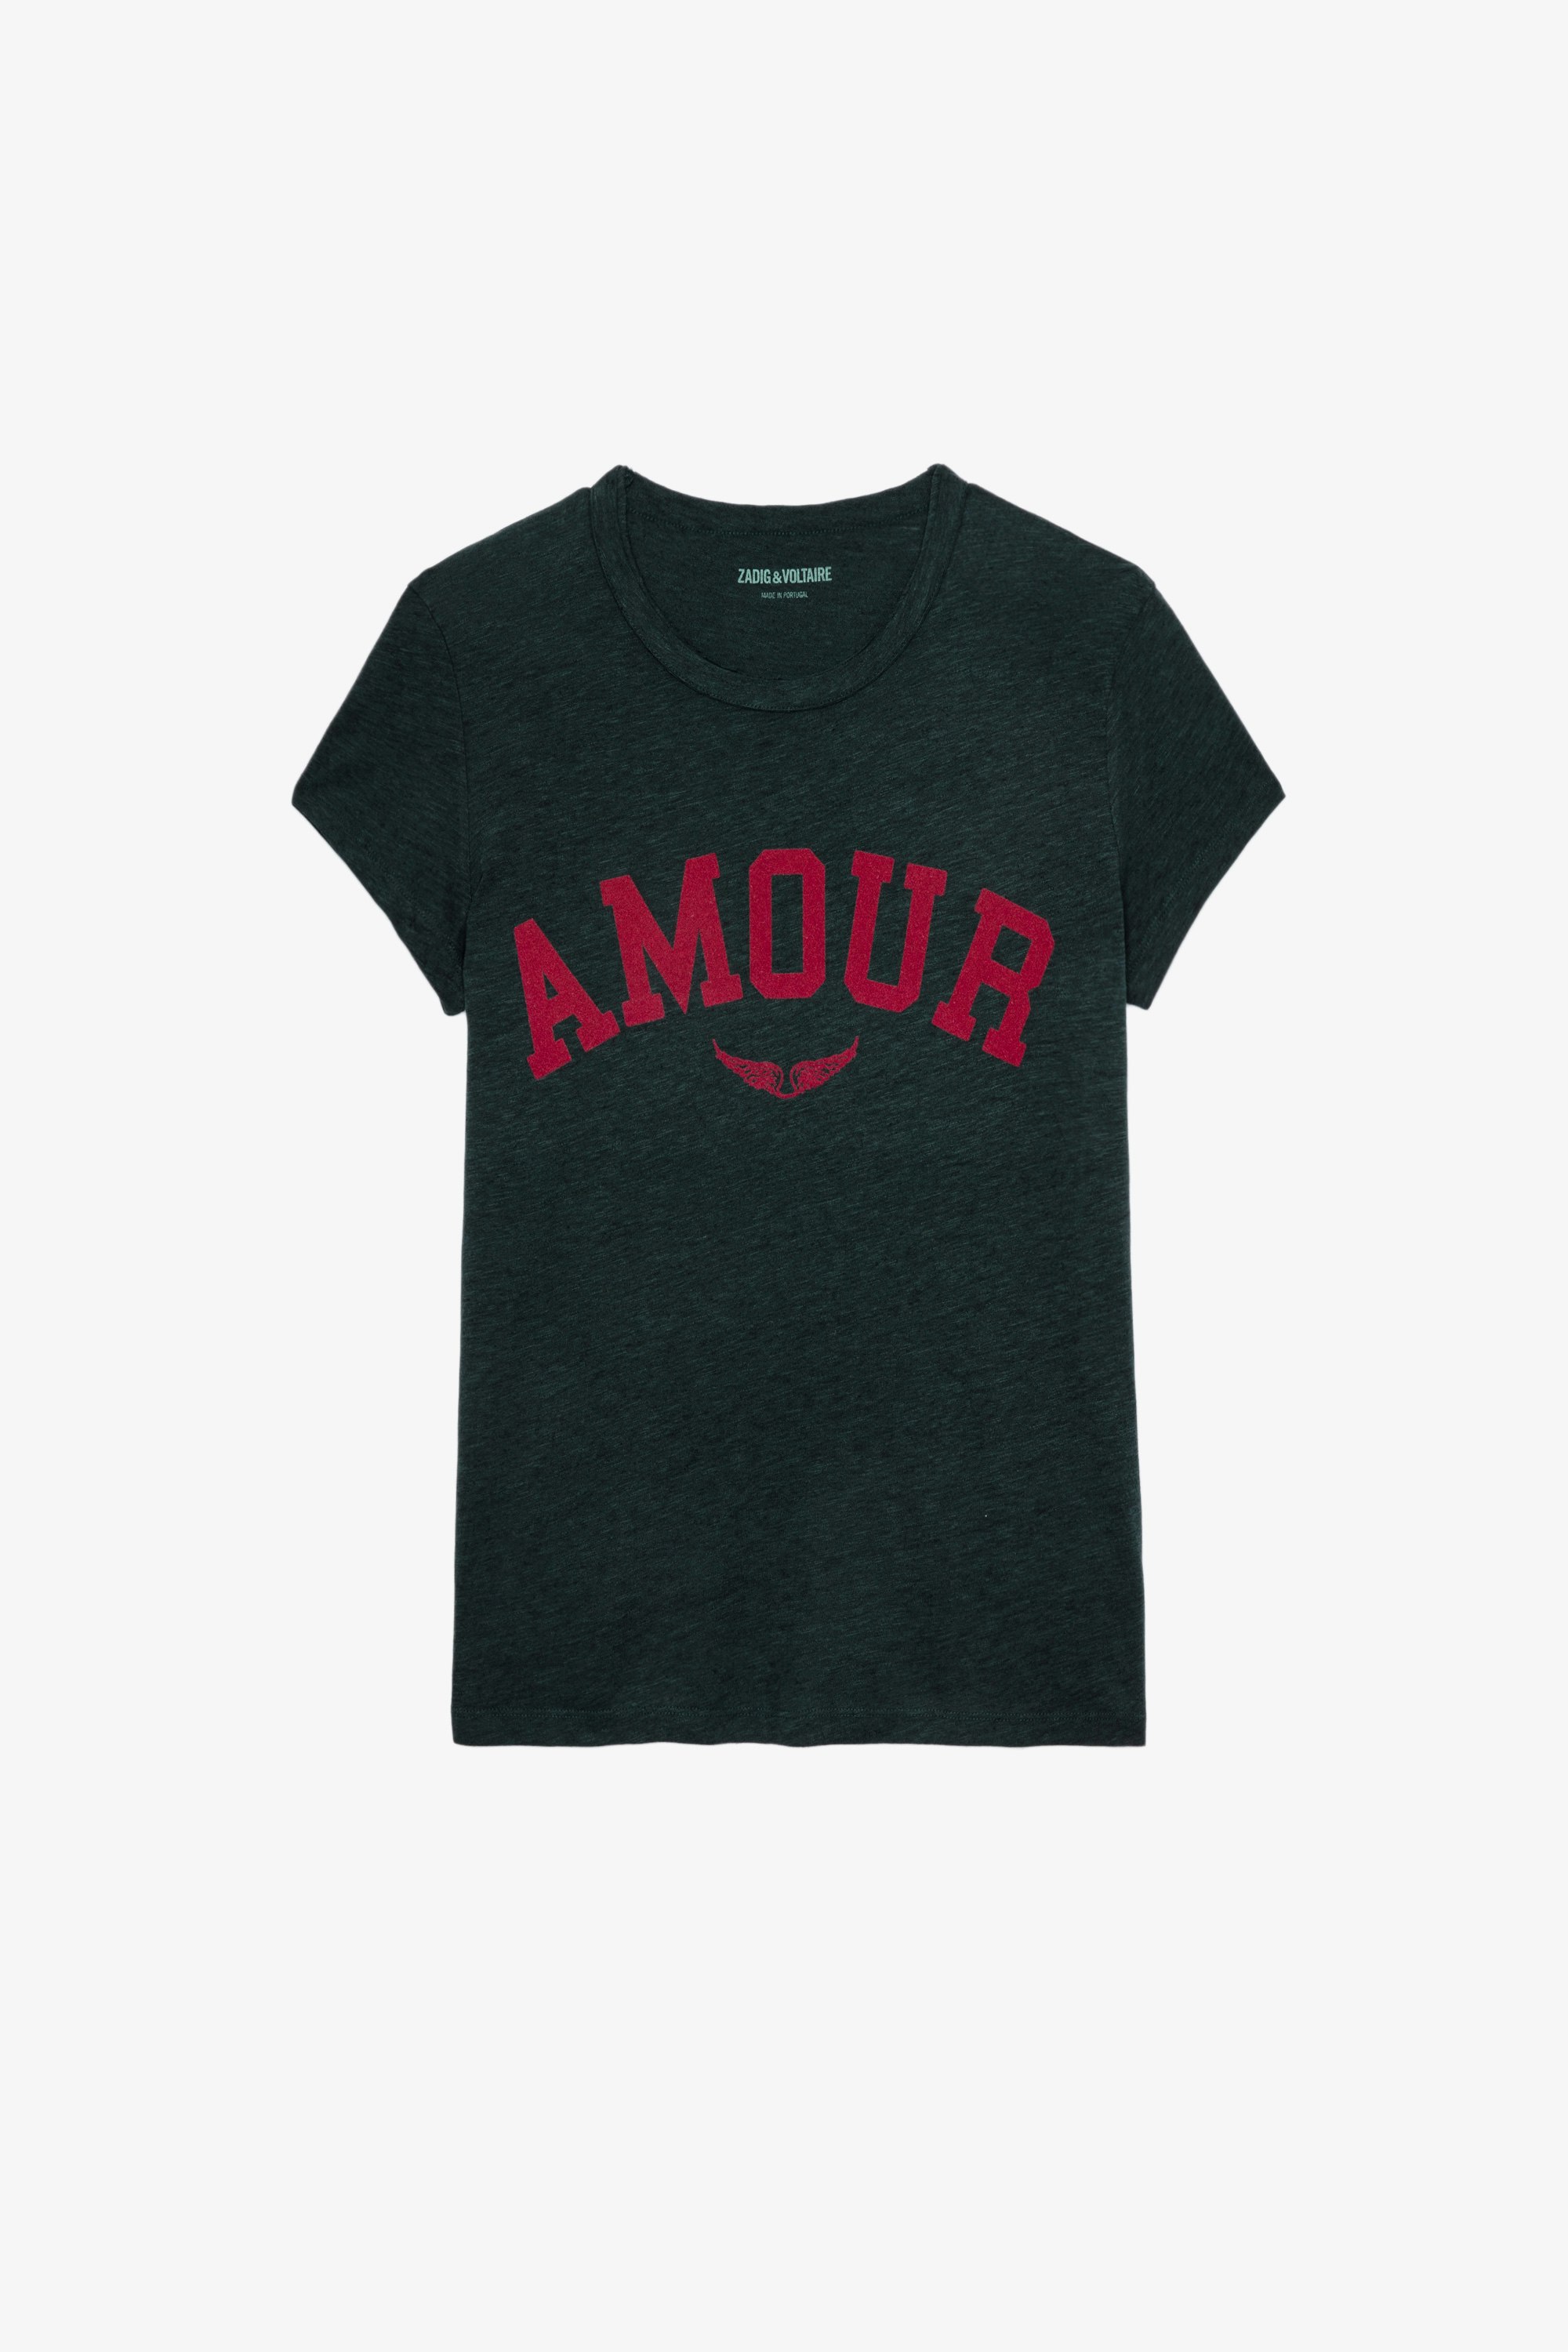 Walk Amour T-shirt Women’s Amour green round-neck short-sleeved T-shirt